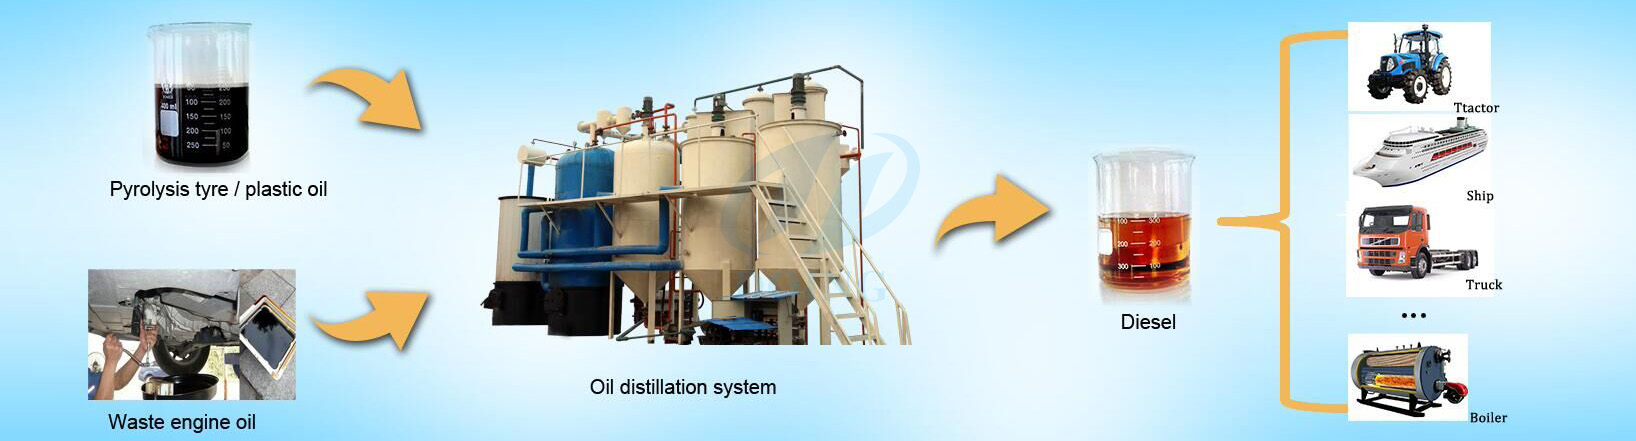  oil  distillation process plant